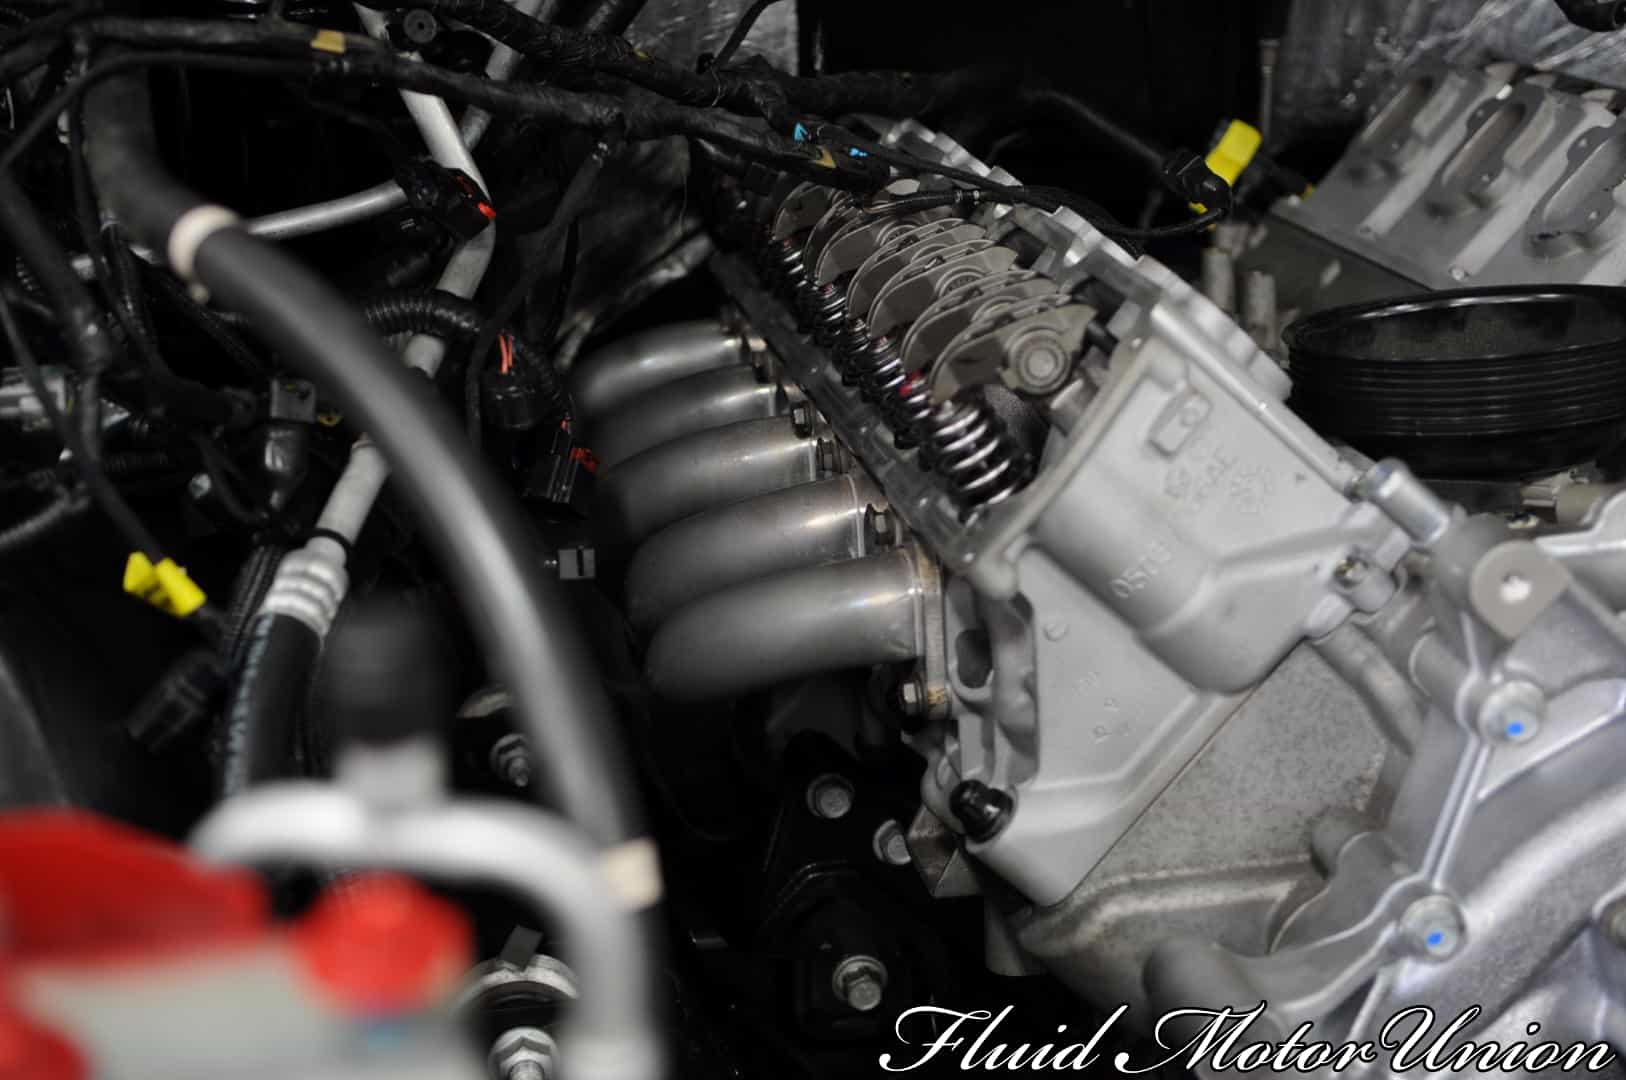 Dodge ram srt10 supercharged_4848 - Car Repair, & Performance | Flu...